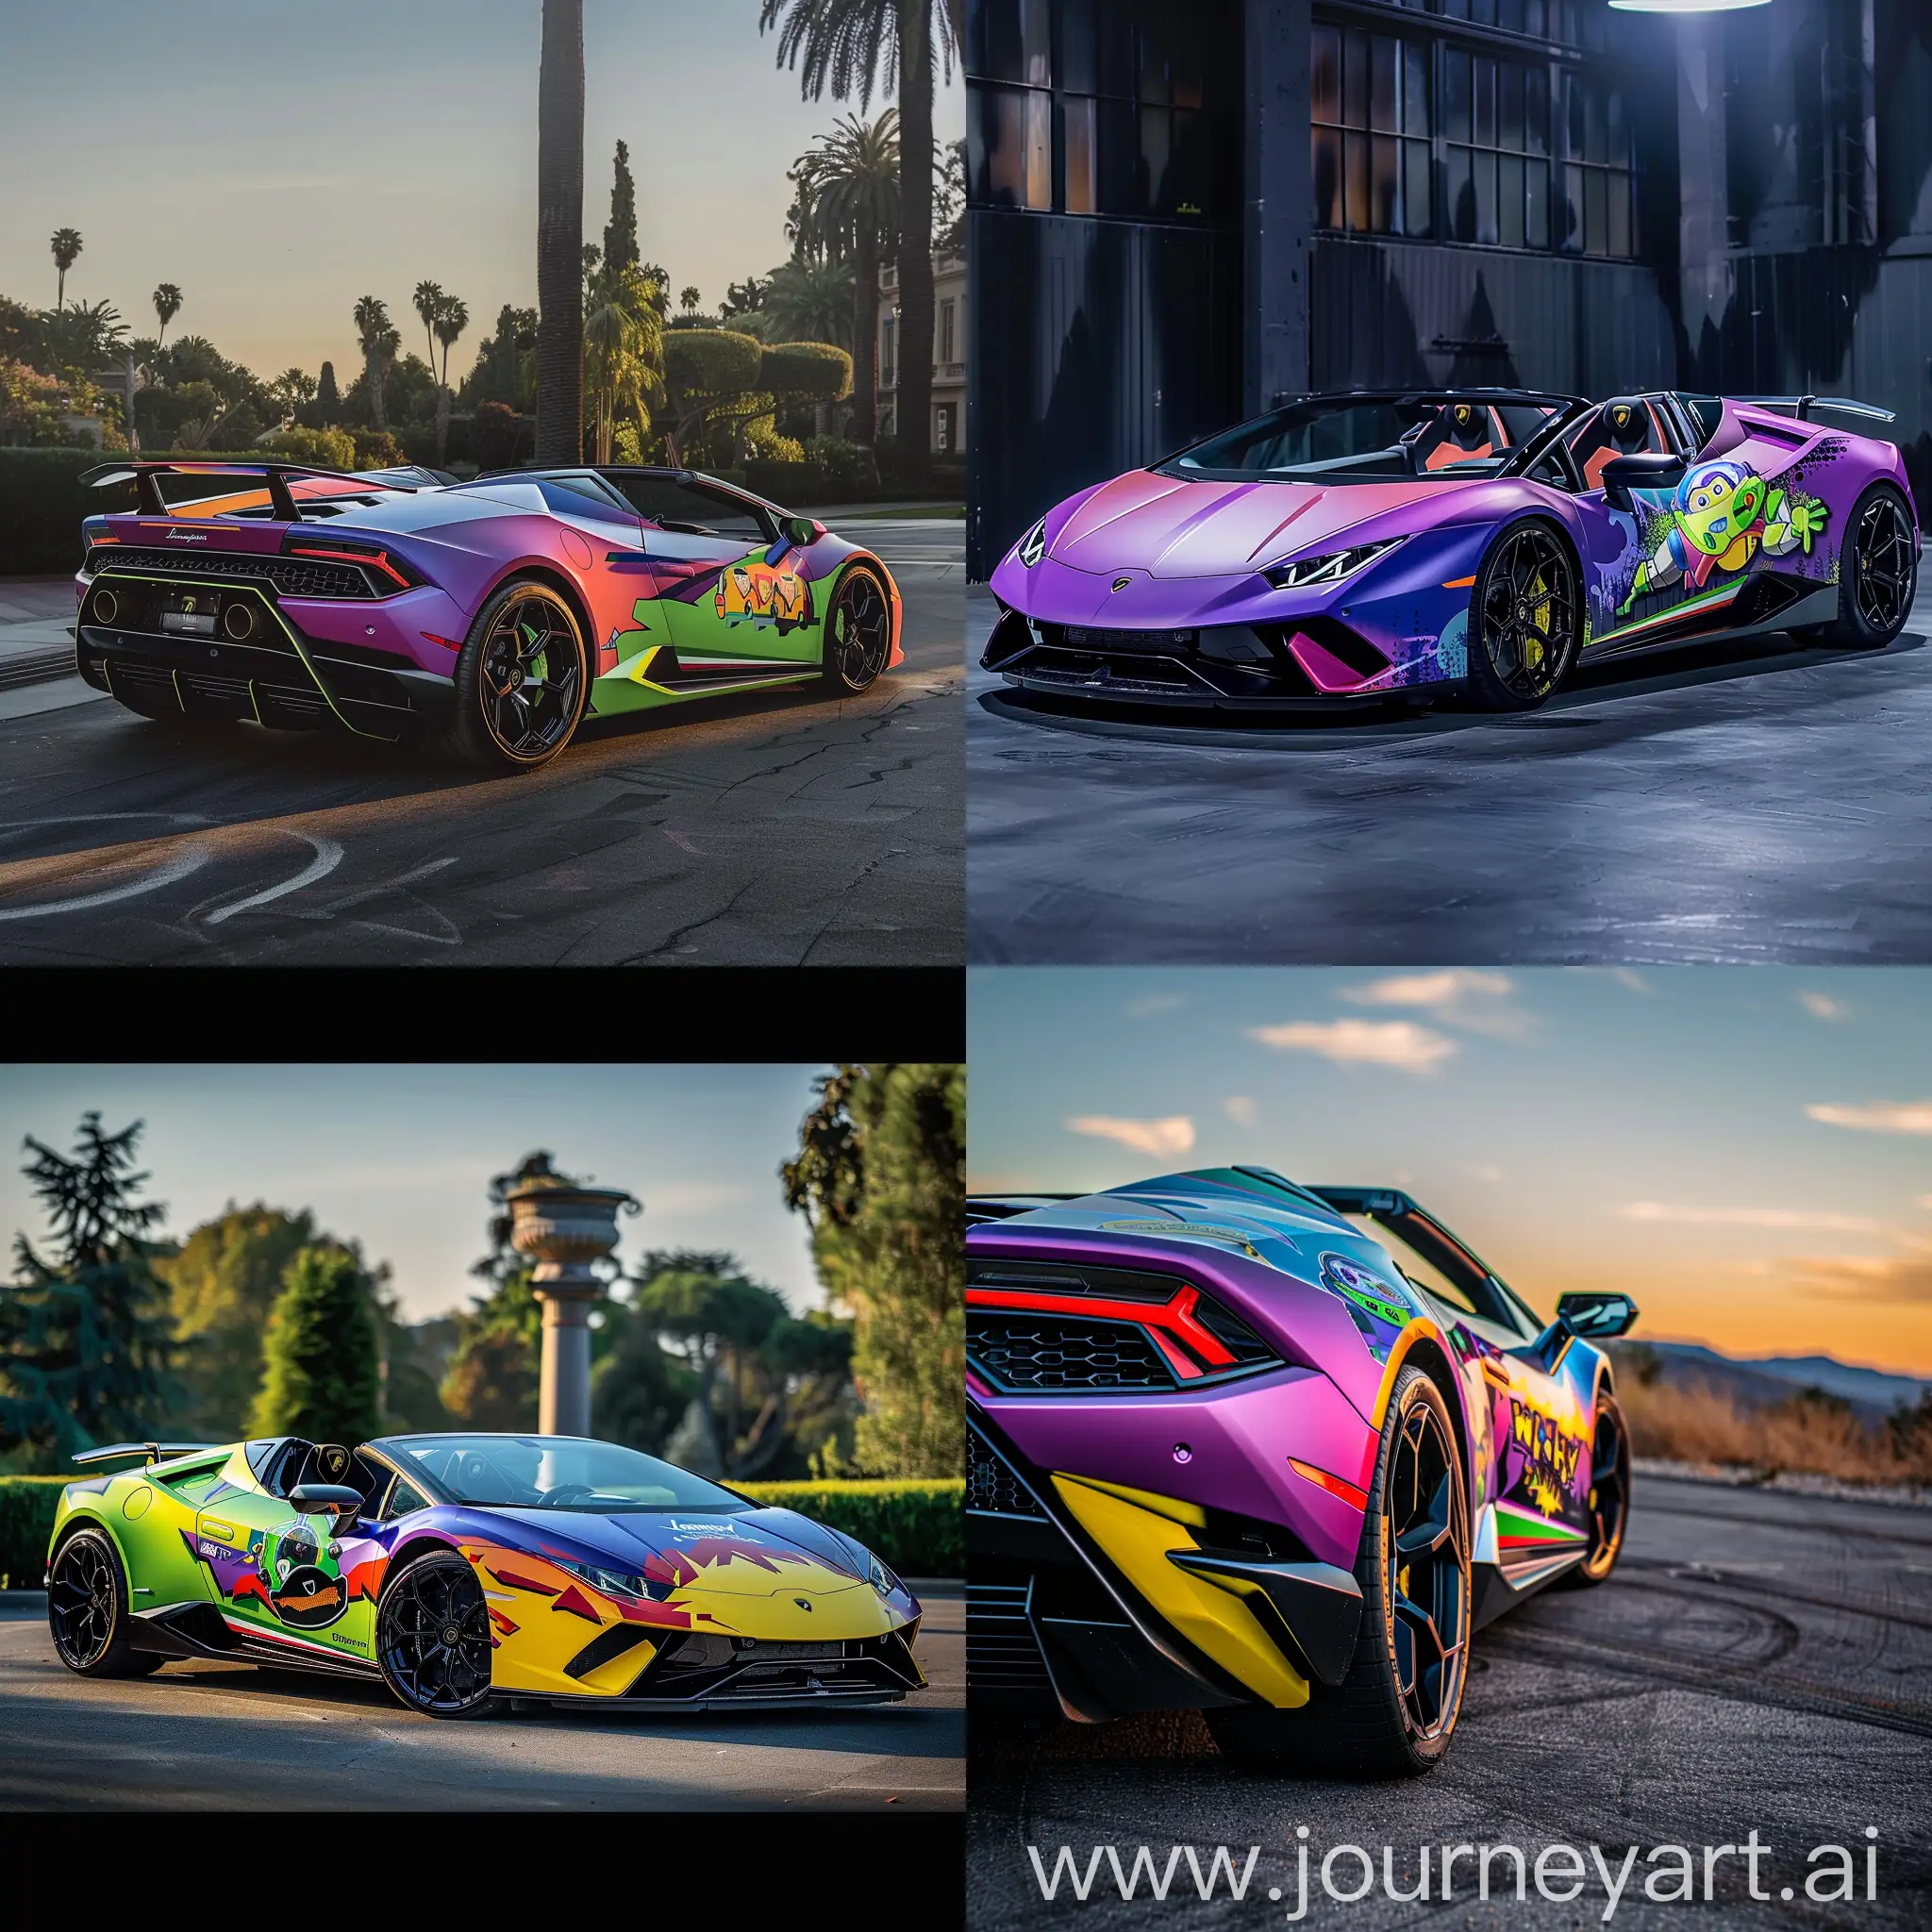 Buzz-Lightyearthemed-Lamborghini-Huracan-Performante-Spyder